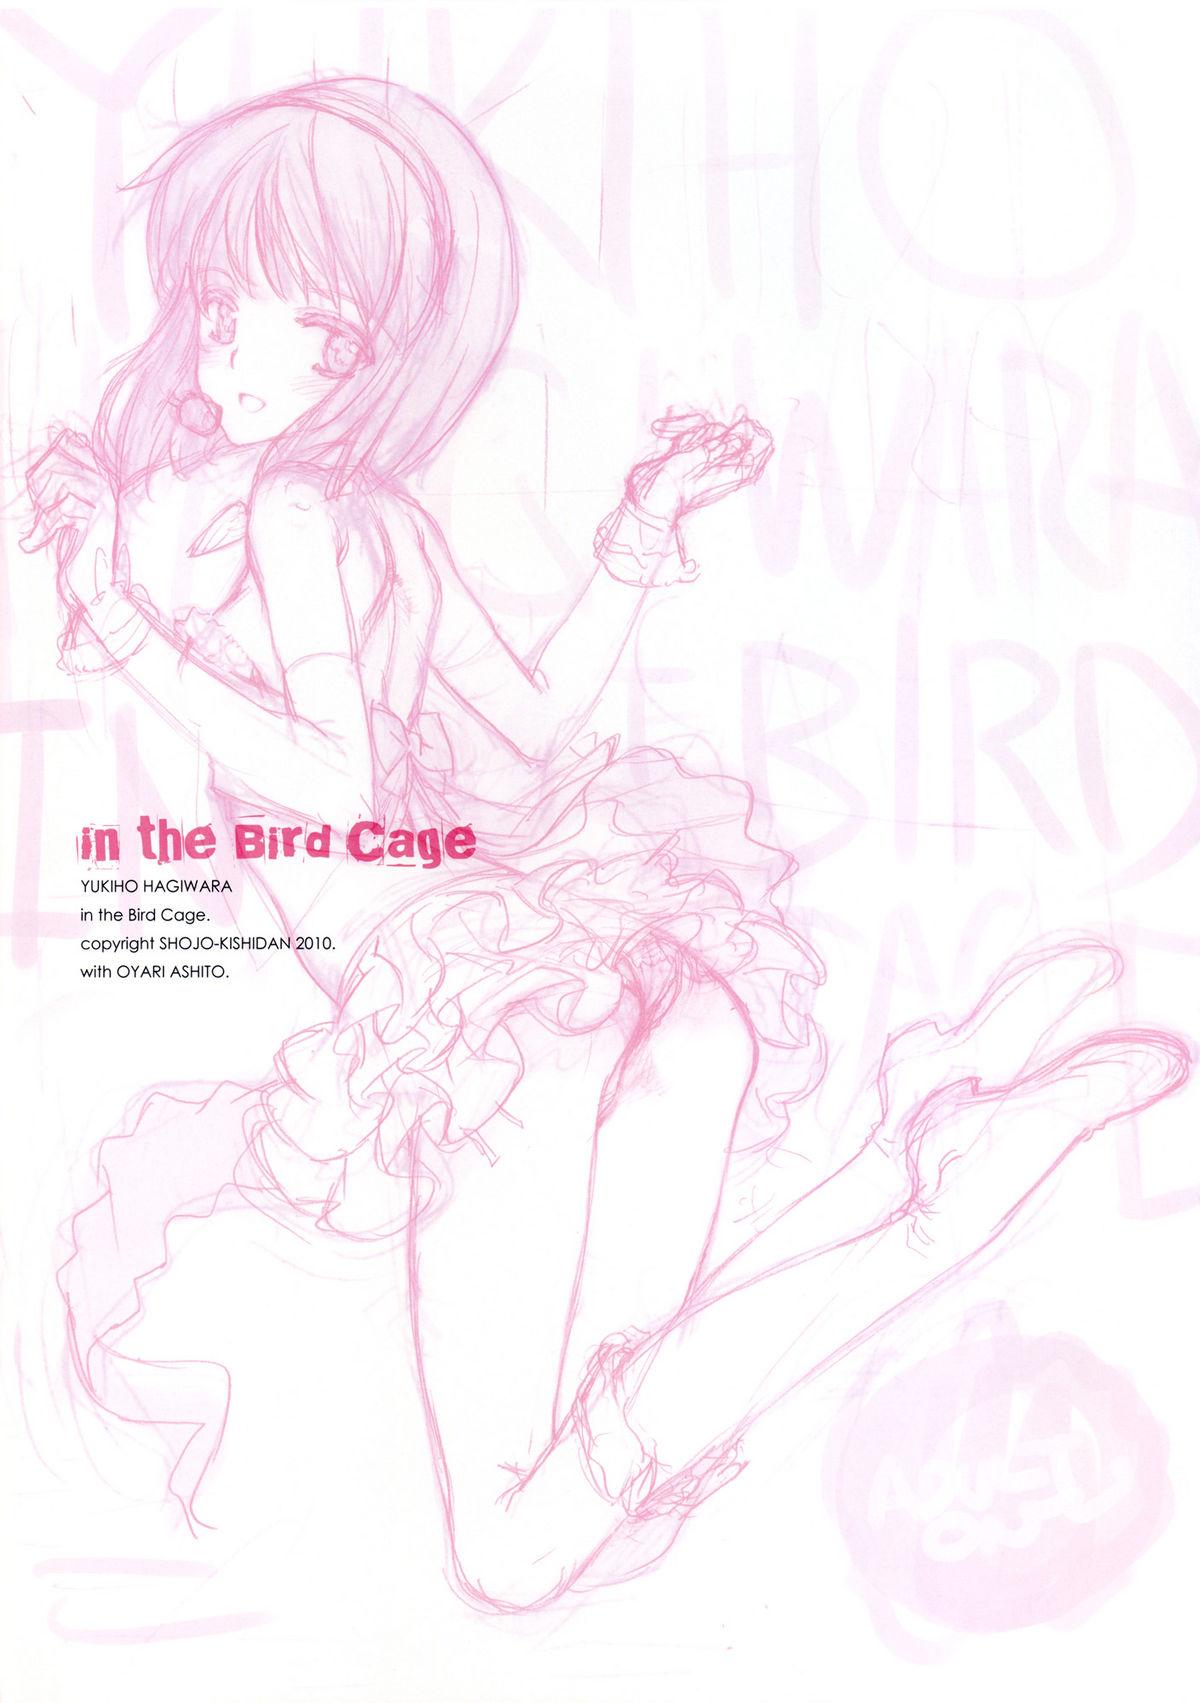 YUKIHO HAGIWARA in the Bird Cage 2